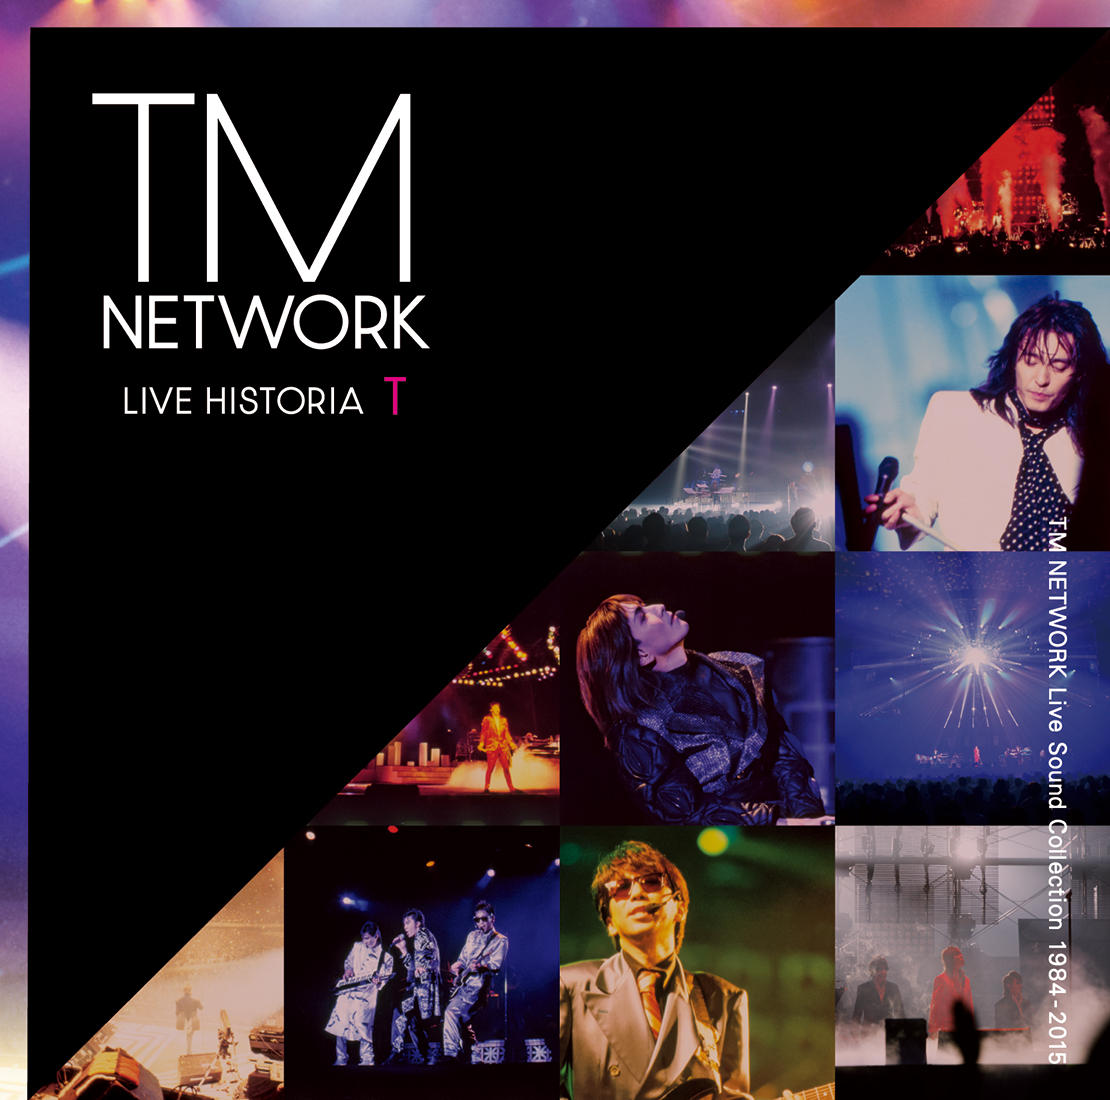 TM NETWORK、デビューからの軌跡を象徴的ライブ映像で辿る特別編集版ヒストリービデオを期間限定公開 - 画像一覧（2/2）